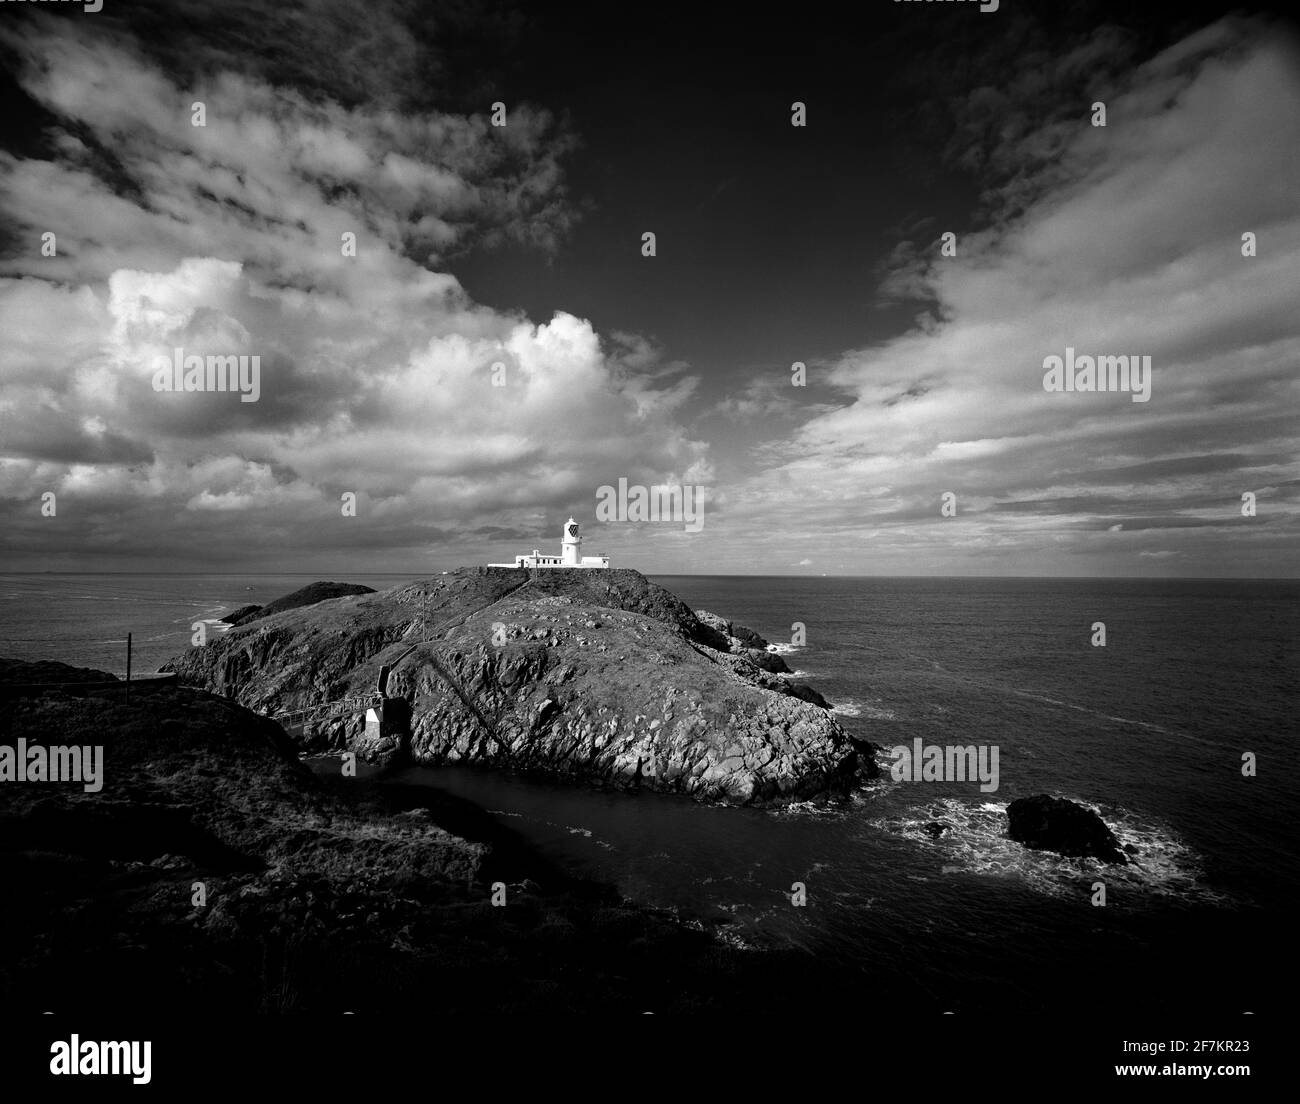 My cymru Black and White Stock Photos & Images - Alamy